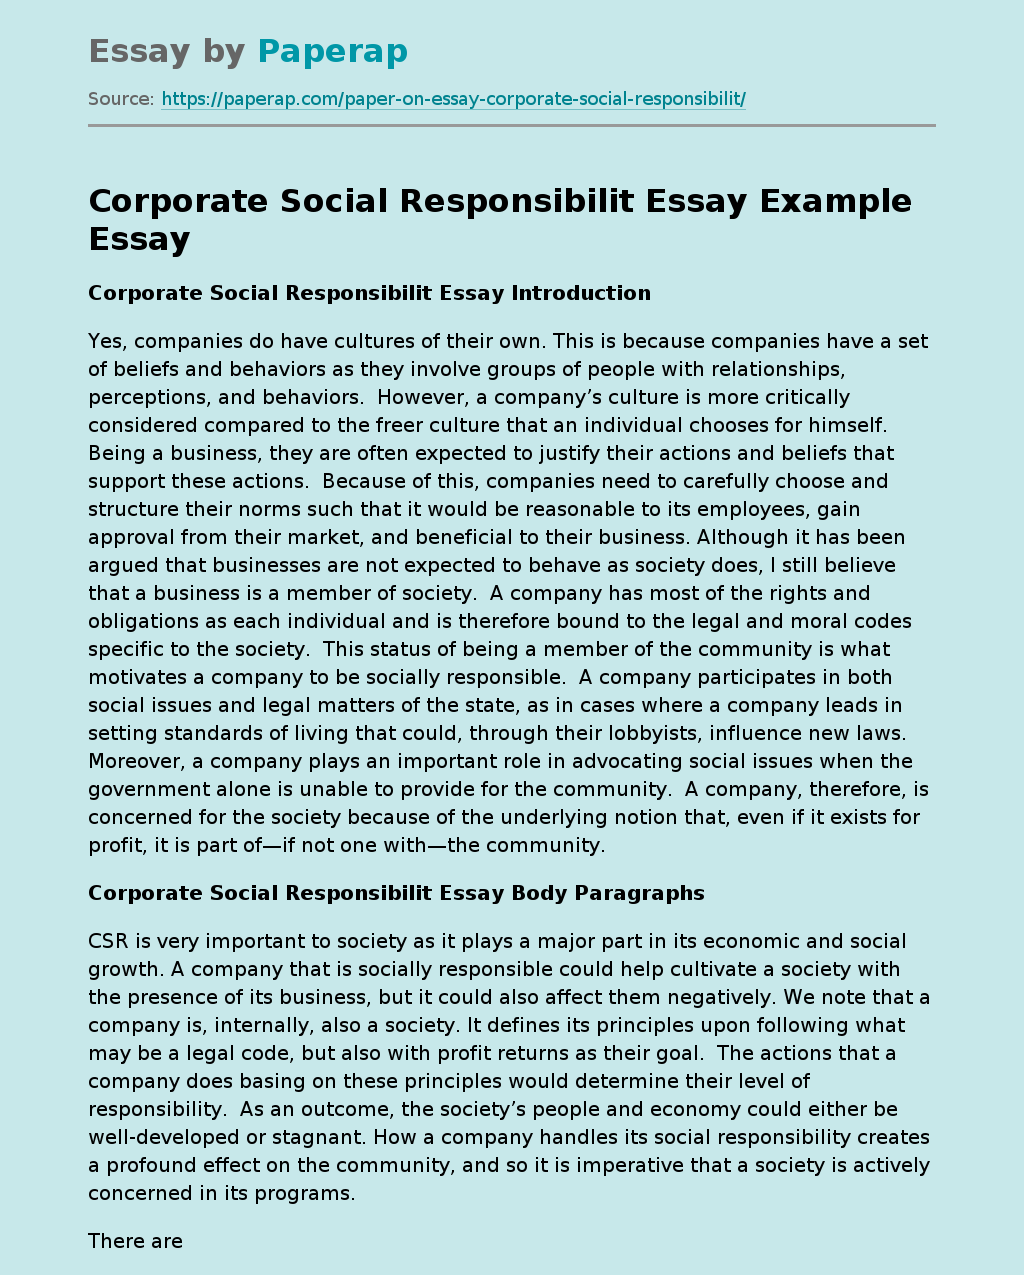 Corporate Social Responsibilit Essay